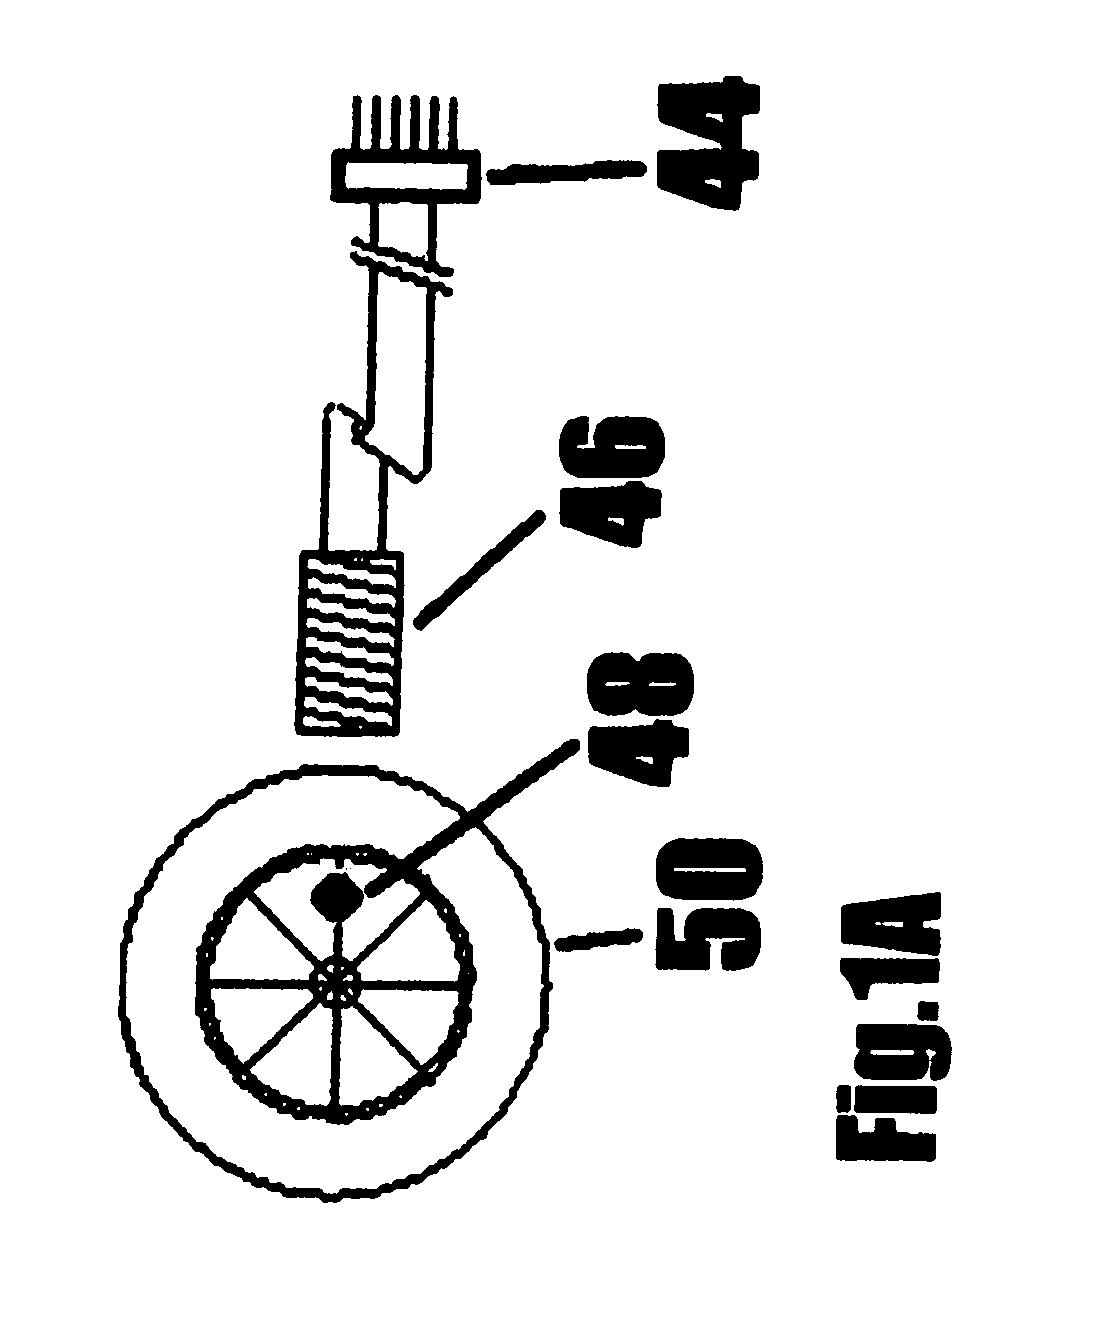 Speedometer drive apparatus and method